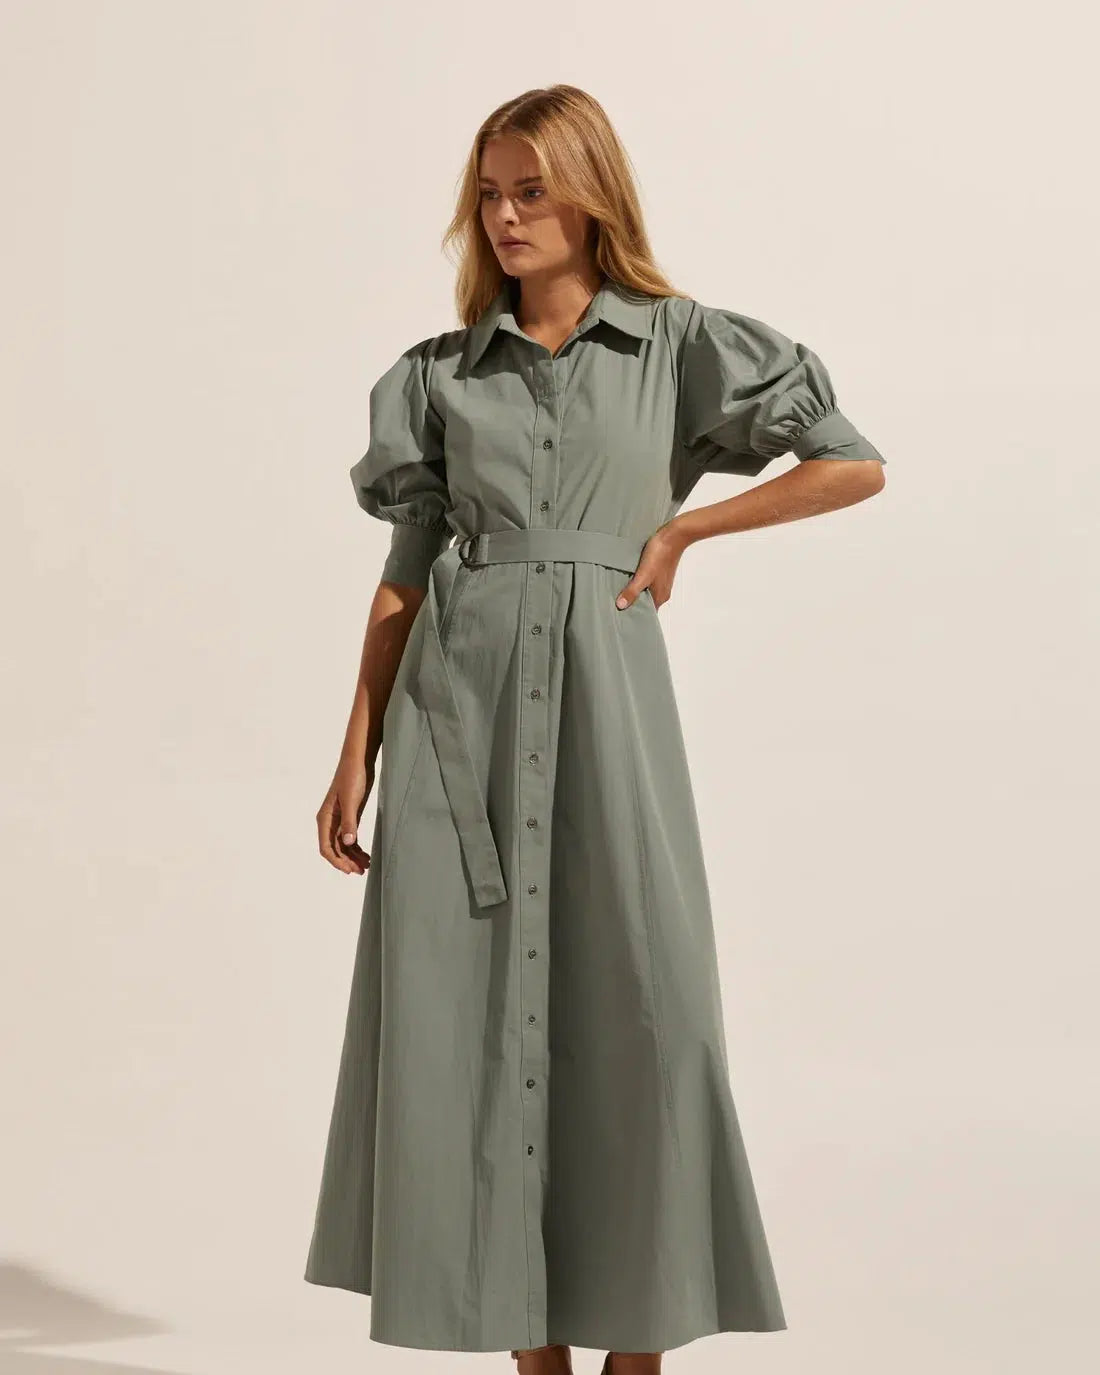 Favour Dress - Sage-Zoe Kratzmann-Lima & Co